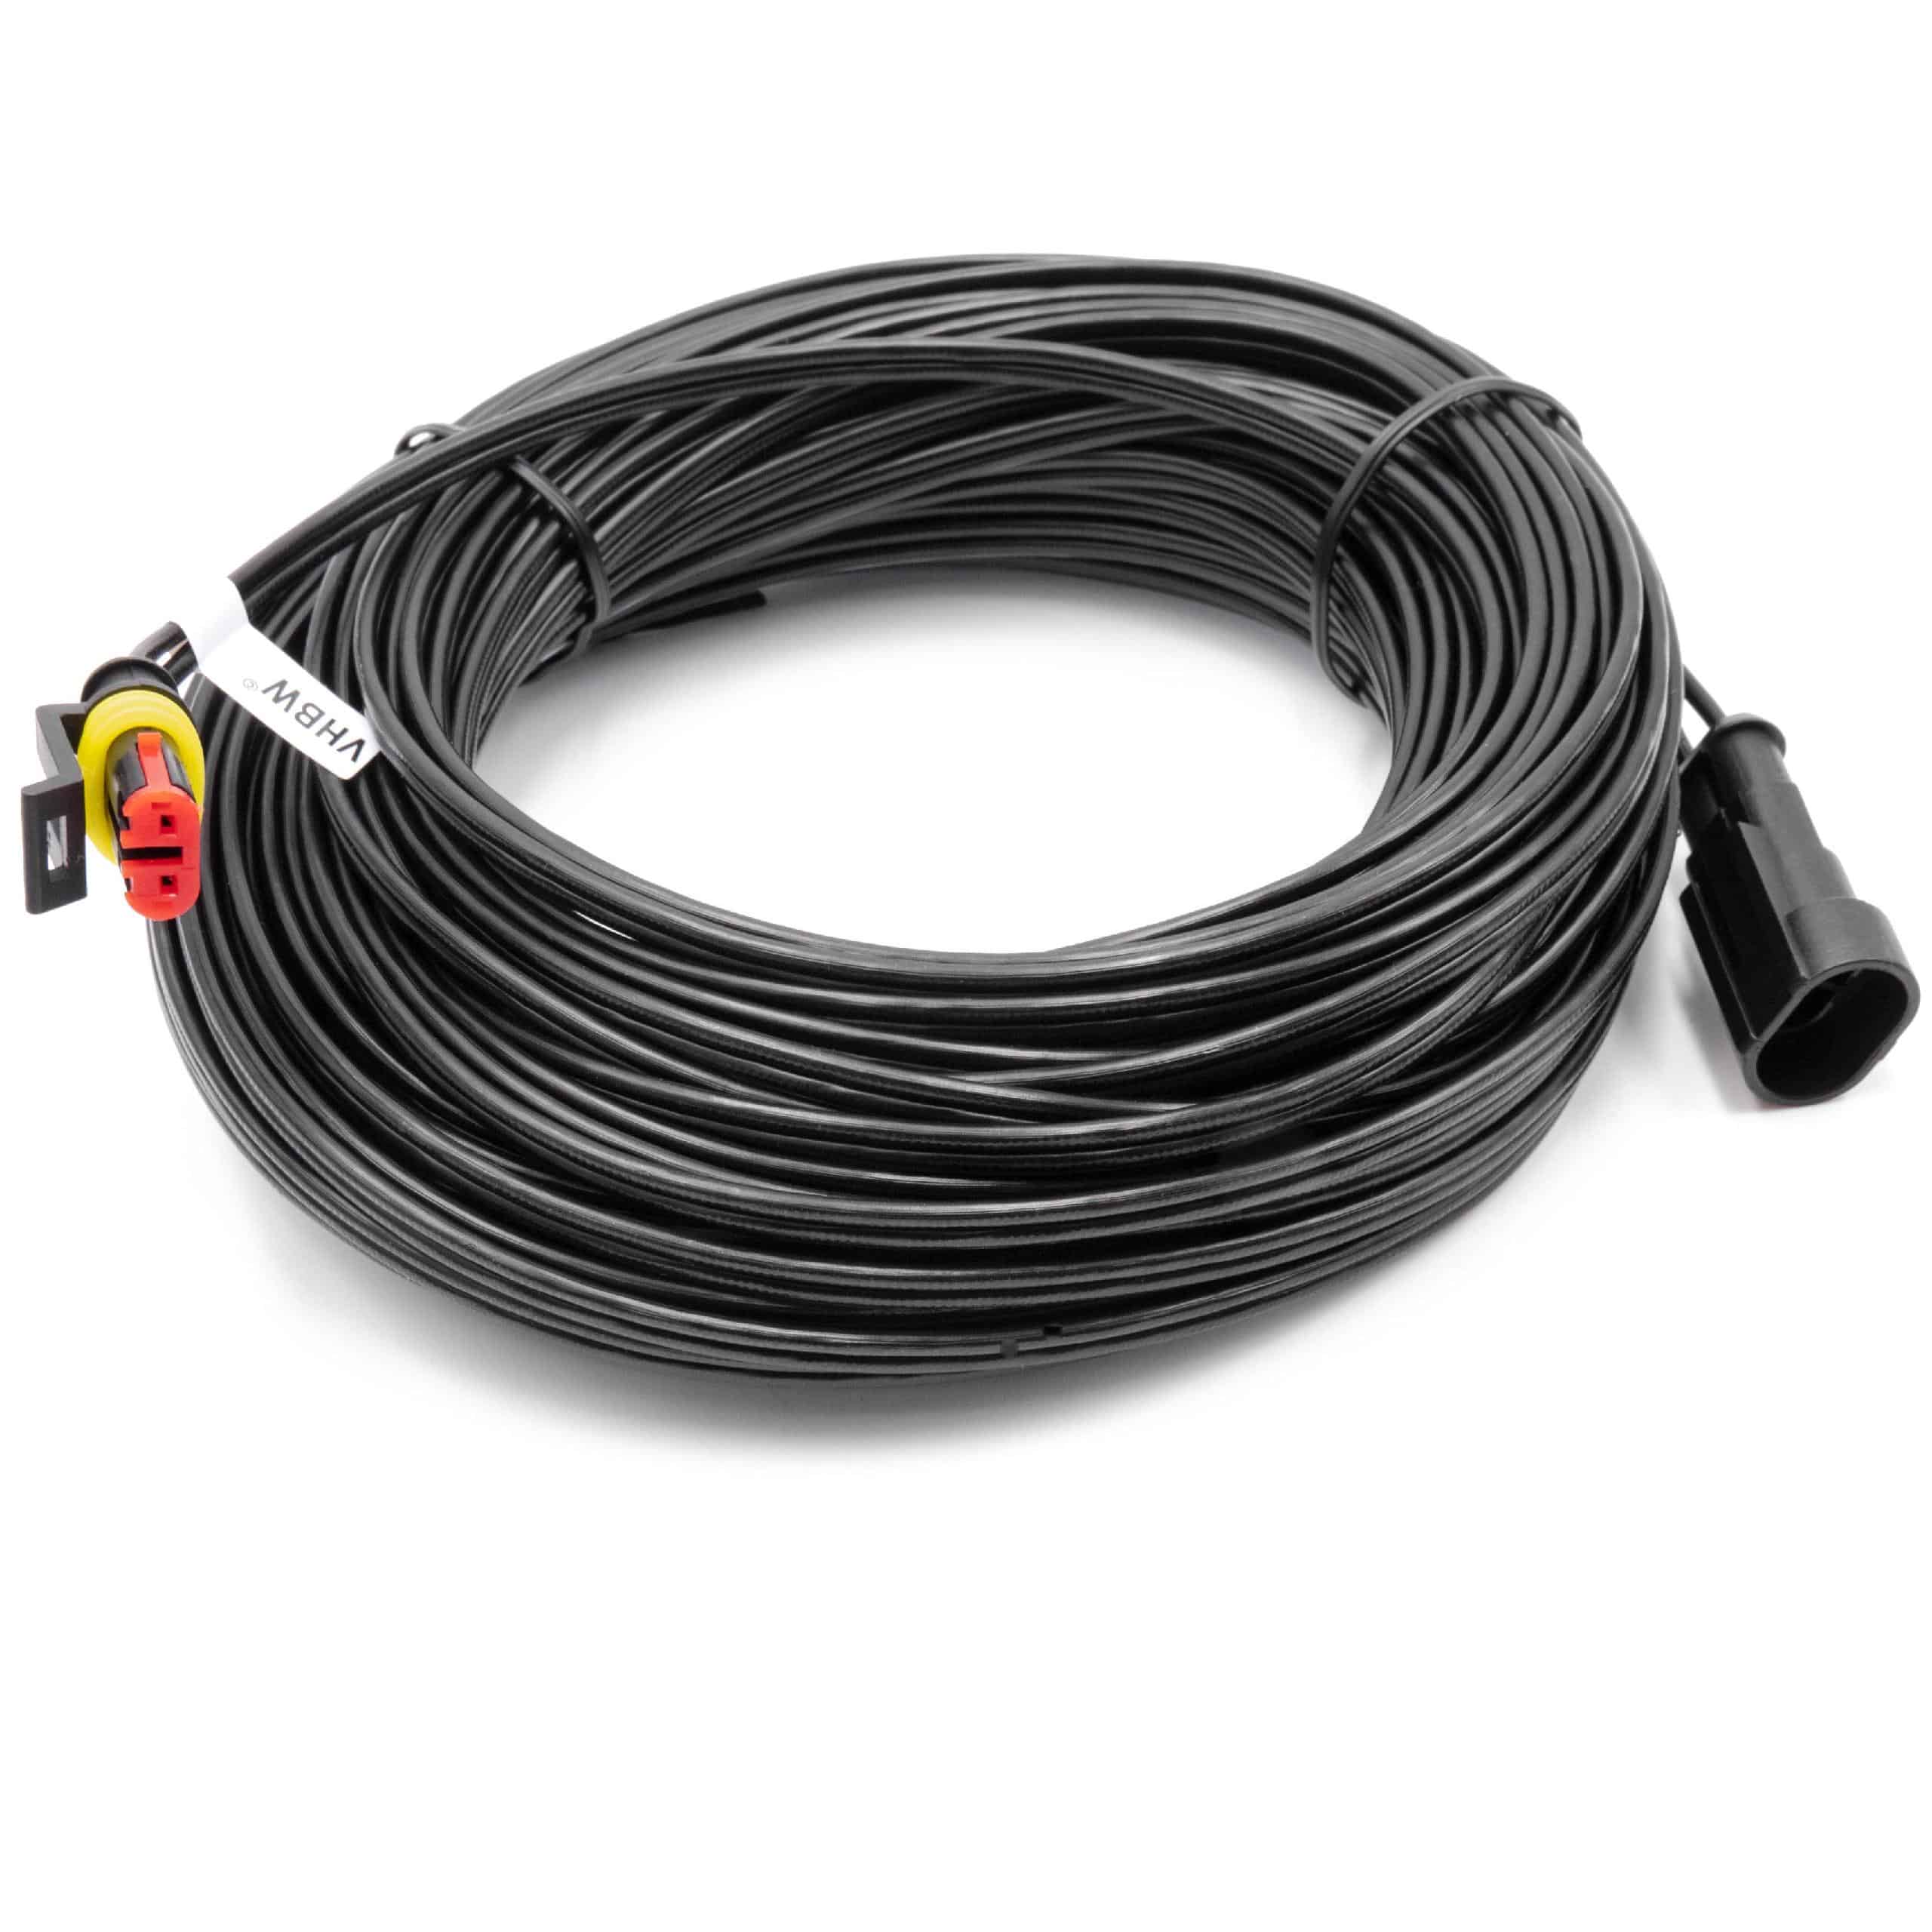 Low Voltage Cable replaces Honda 31786-VP7-013 for ElectroluxRobot Lawn Mower etc. 20 m